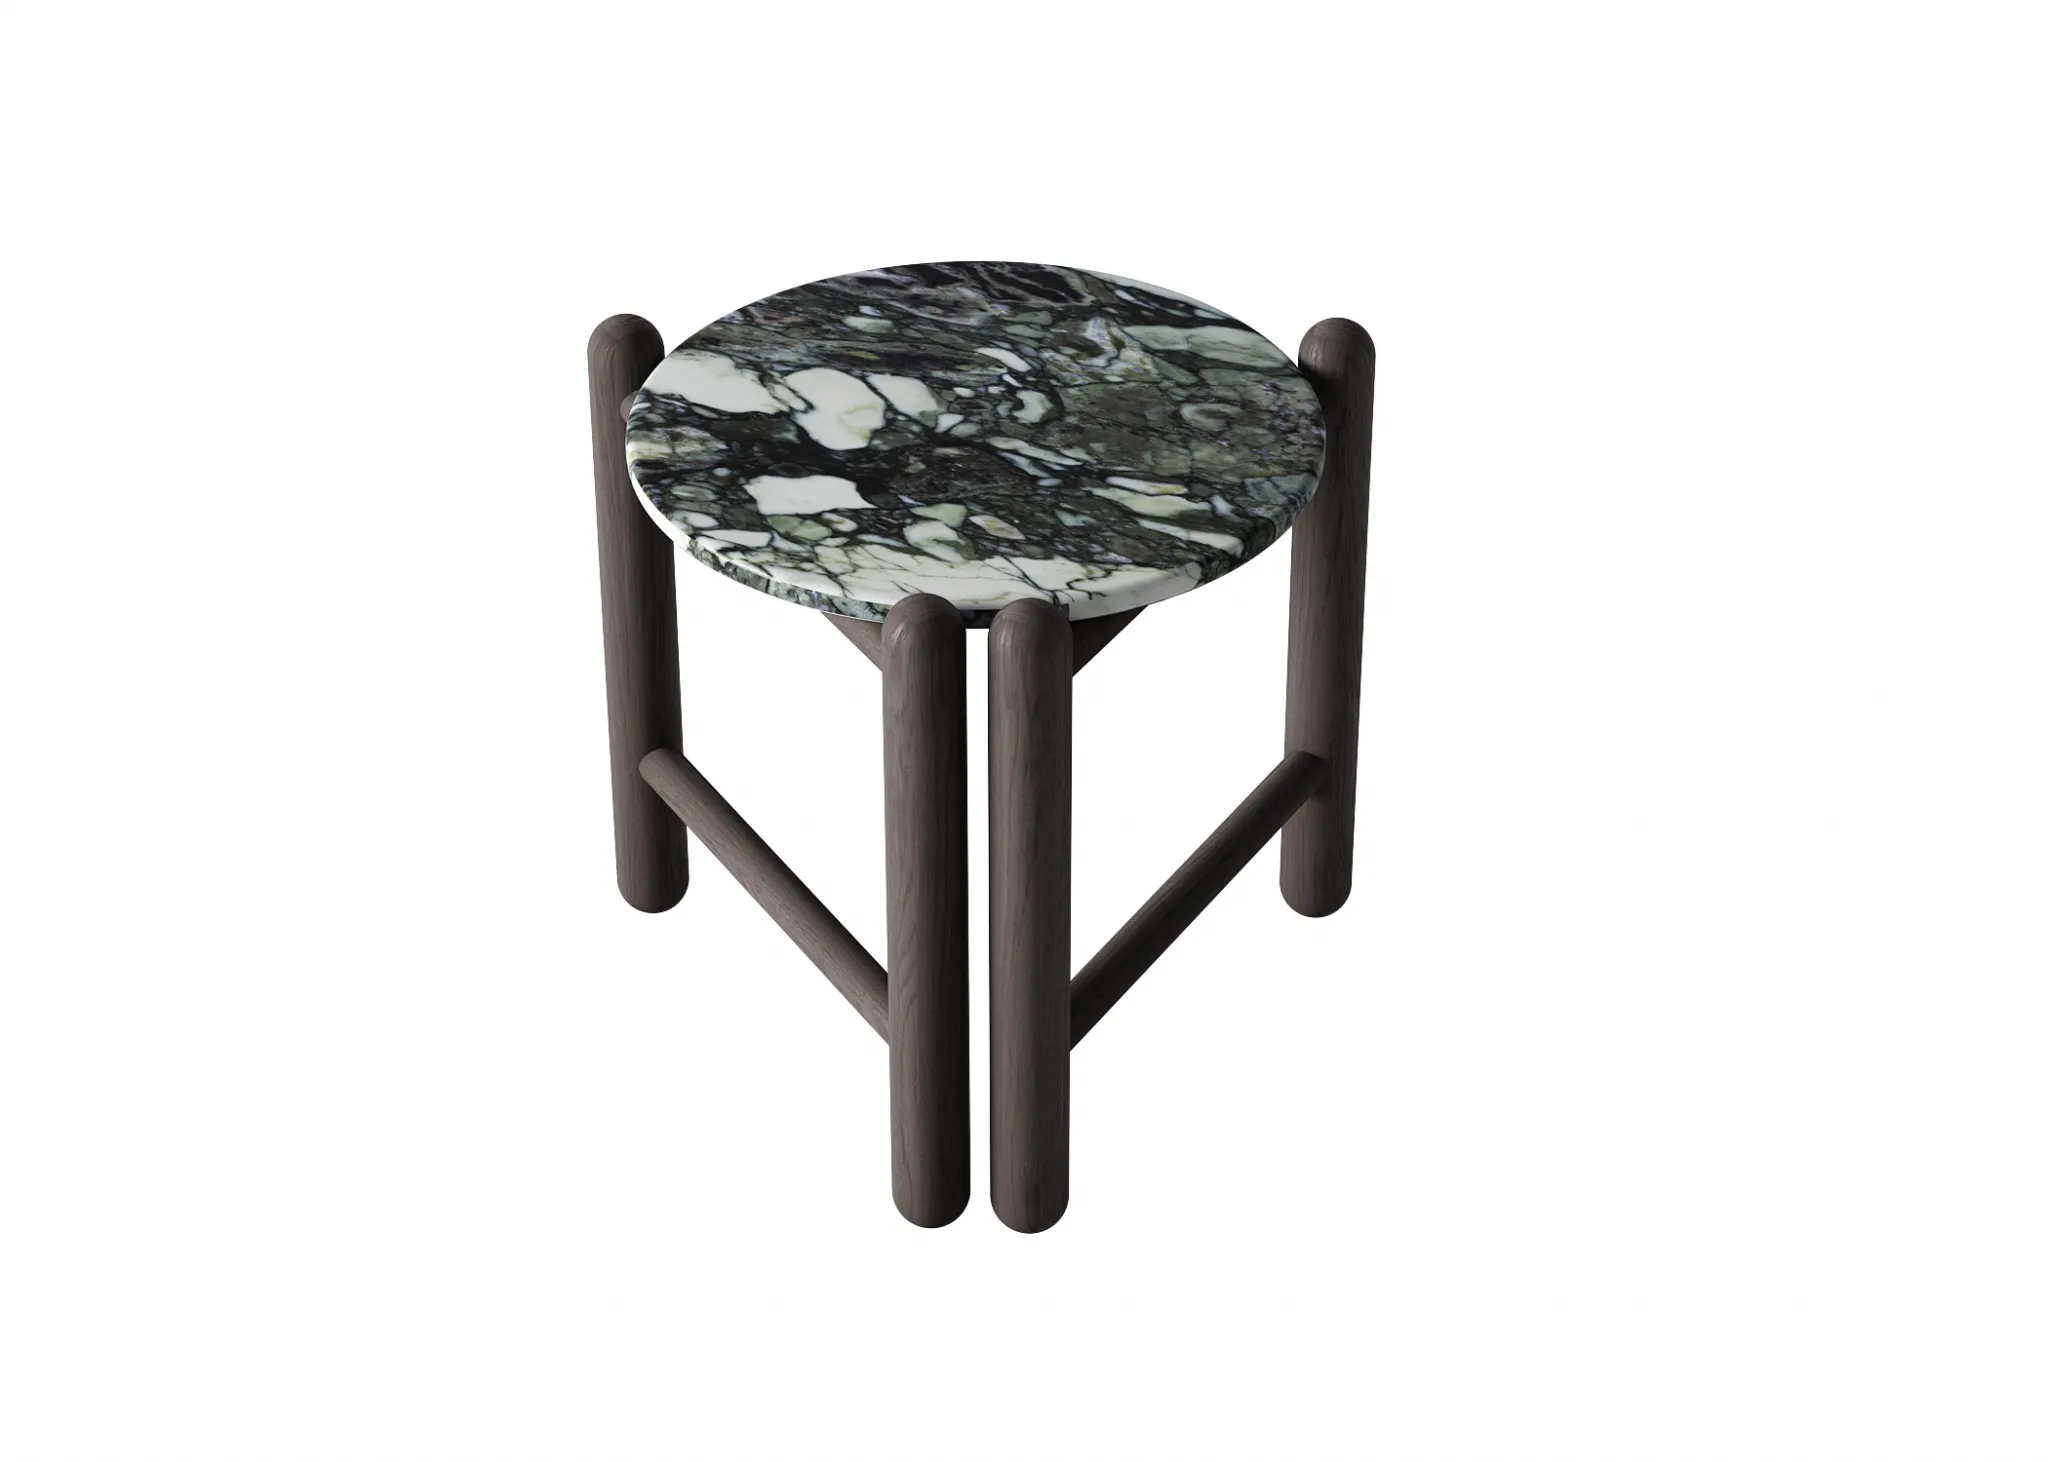 FURNITURE 3D MODELS – TABLES – 0293